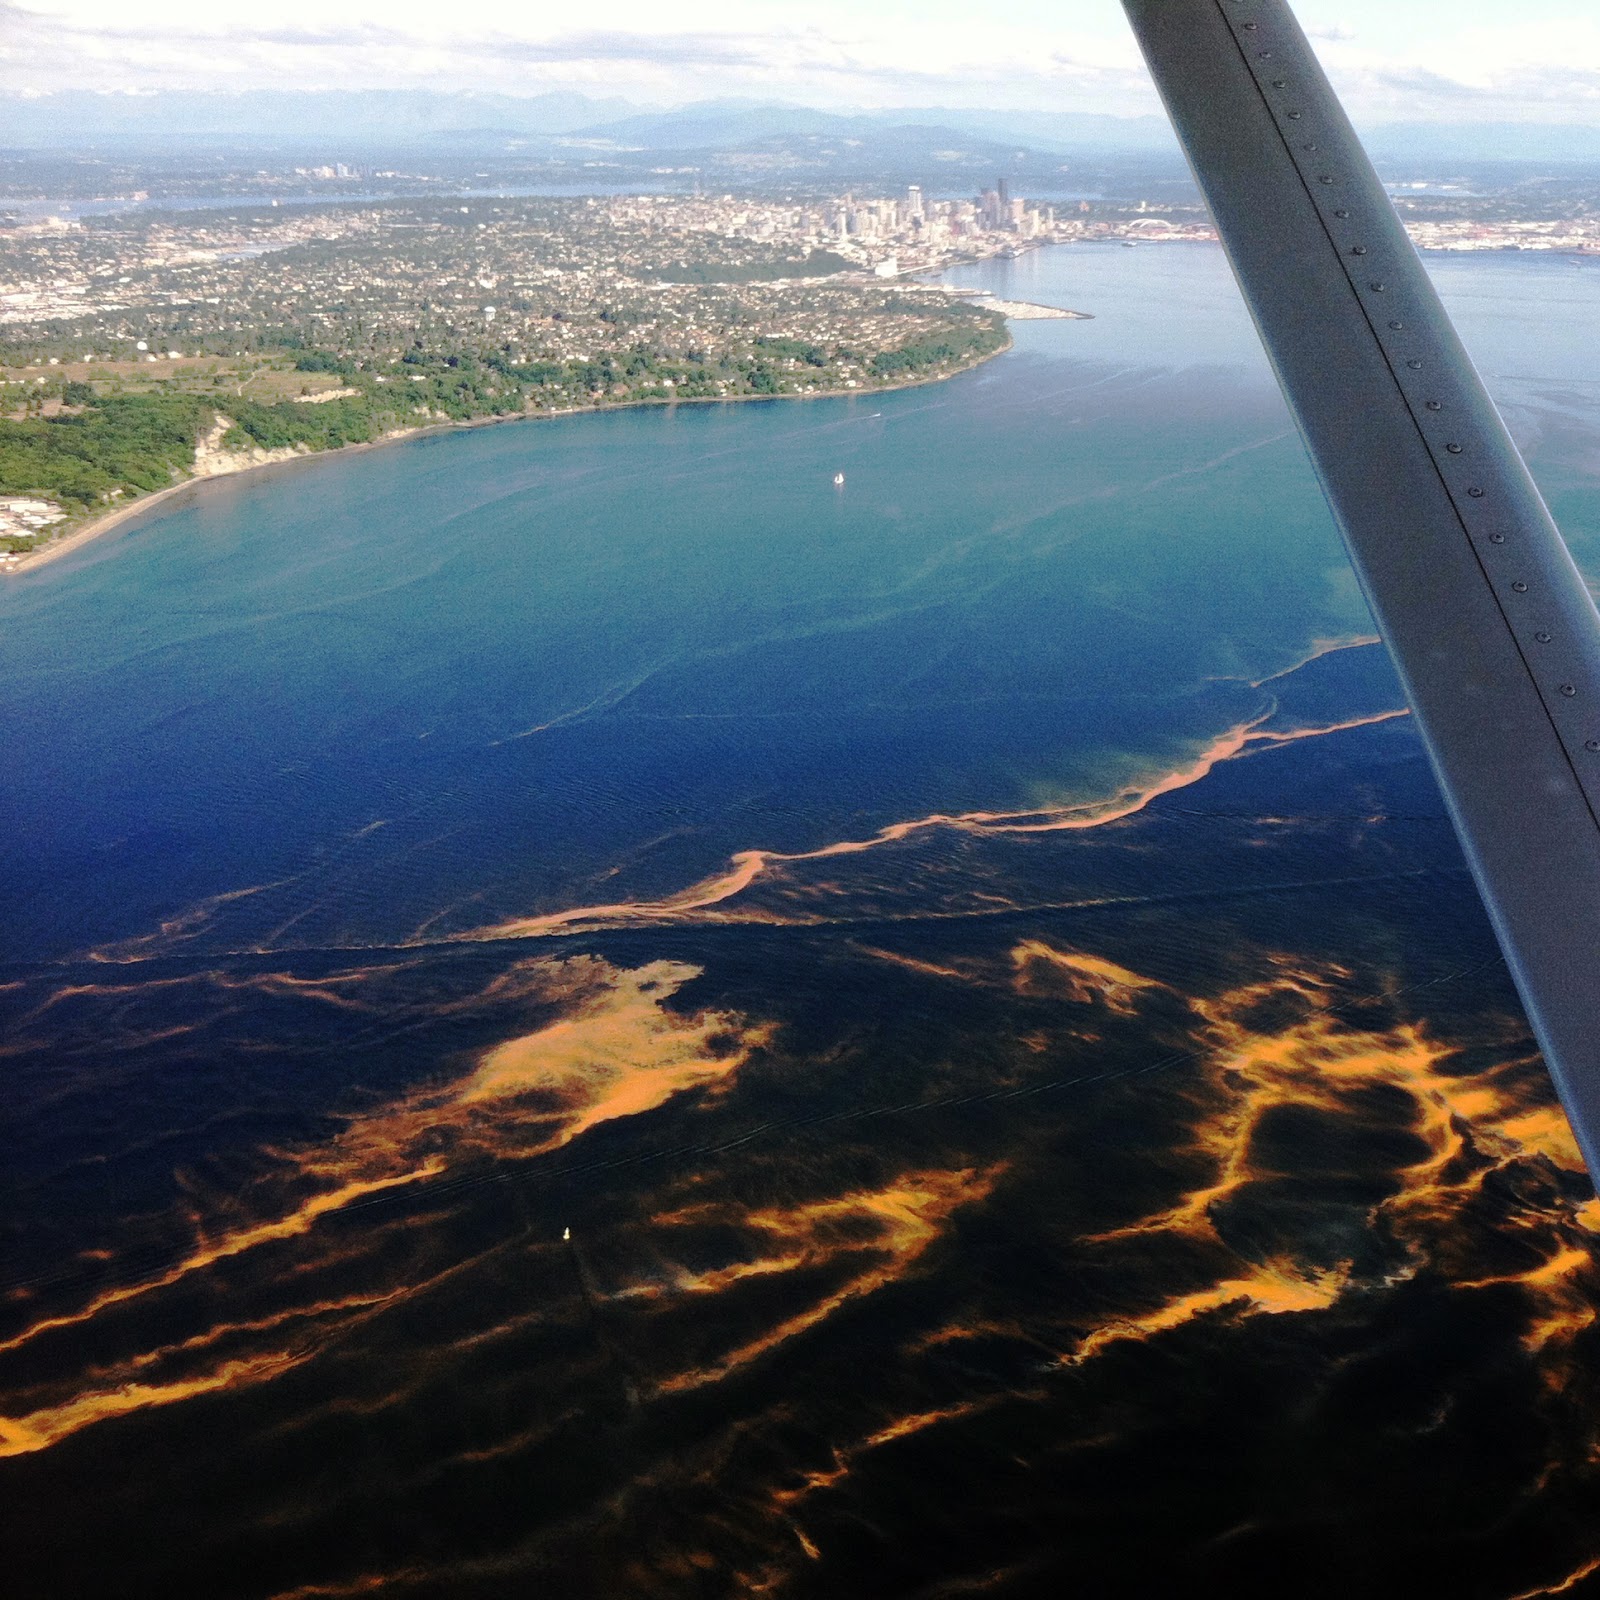 Dark water from above, streaked with bright orange algae. 